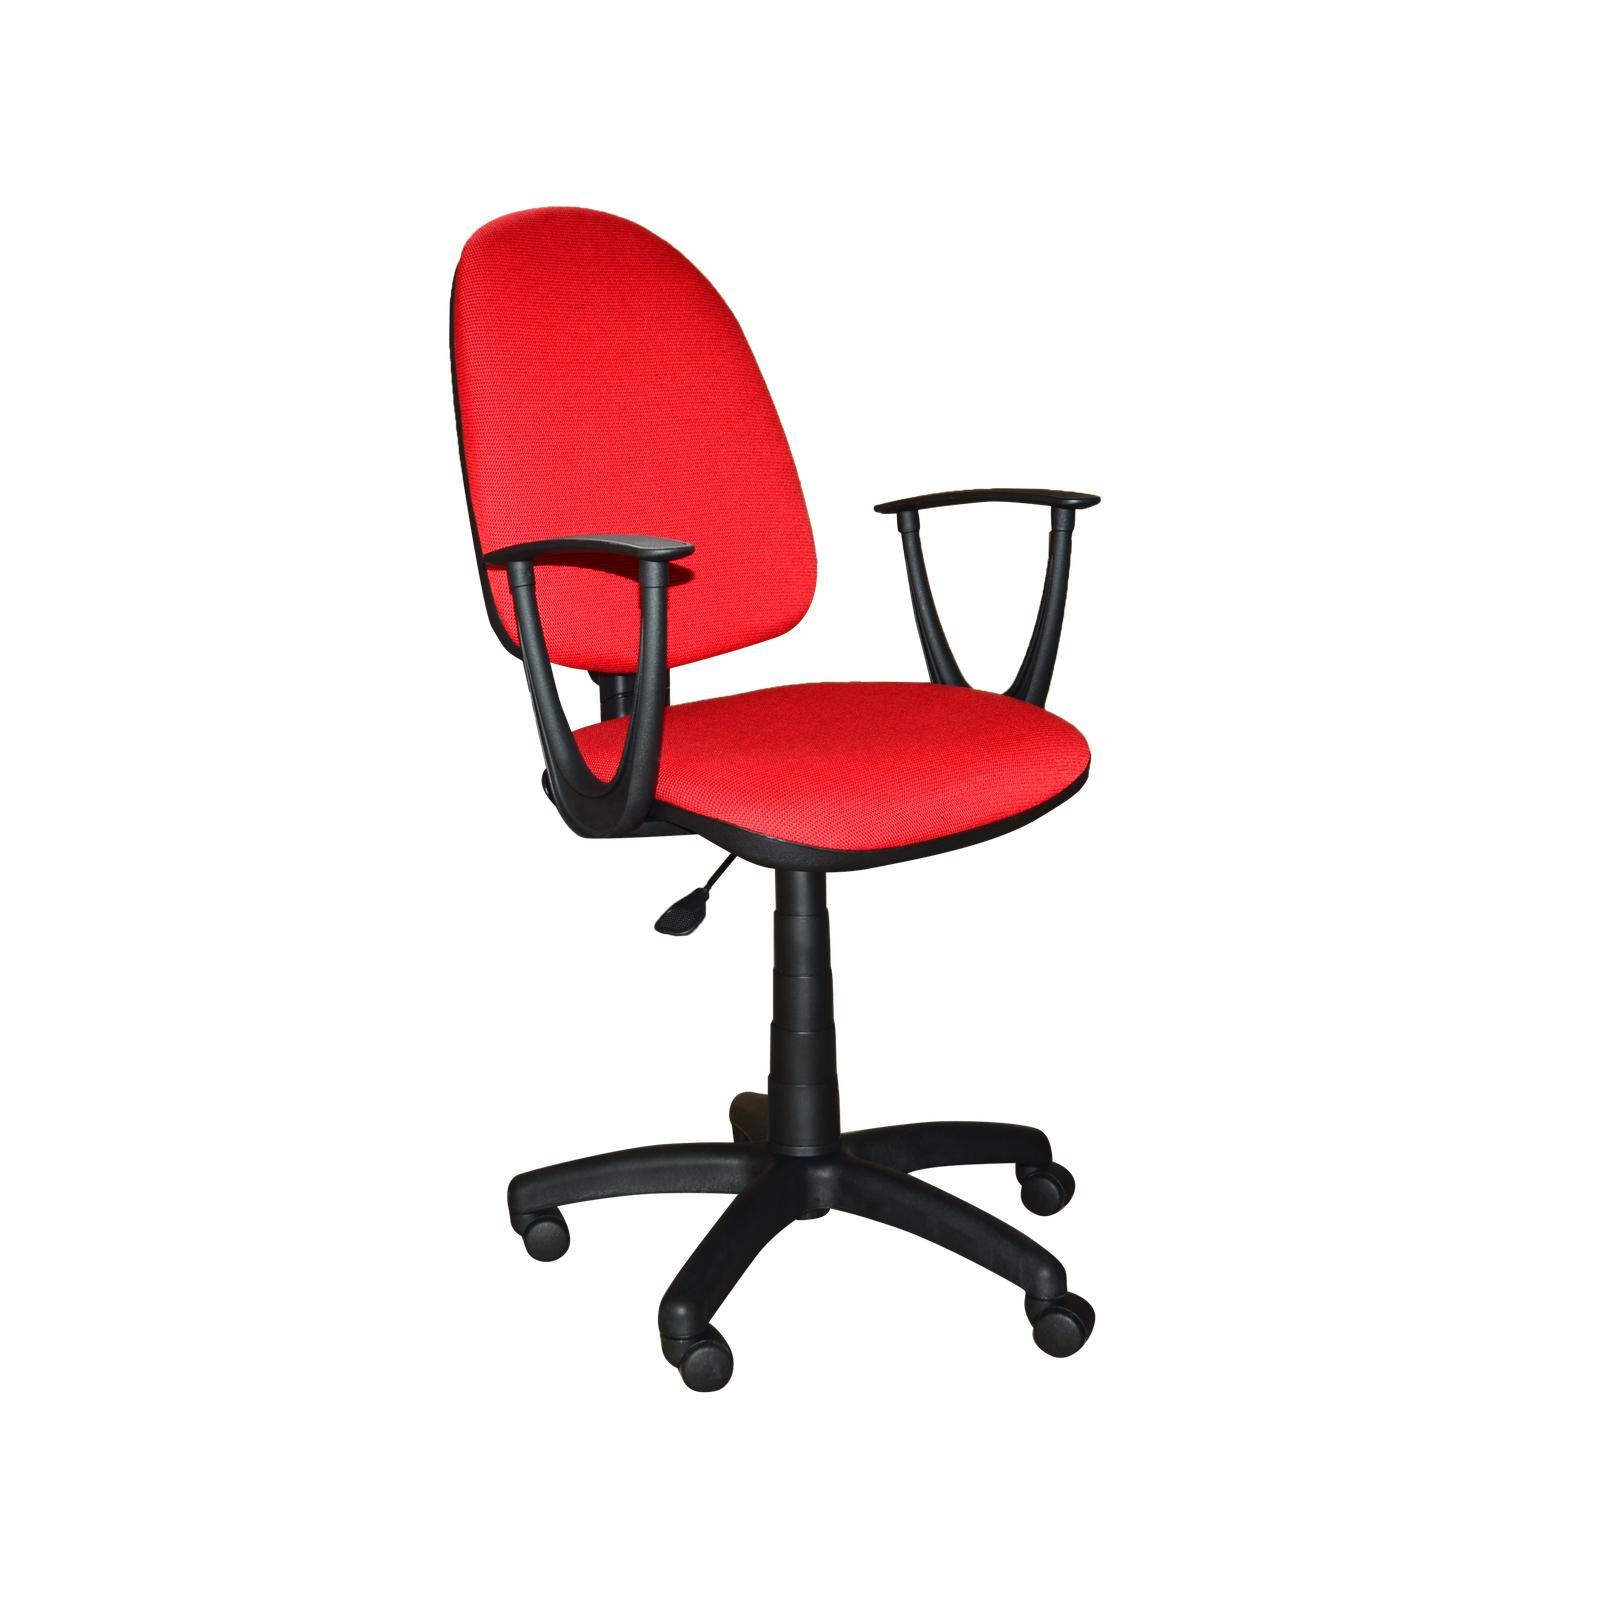 Офисное кресло Примтекс плюс Jupiter GTP Sonata C-16 Red (Jupiter GTP sonata C-16)